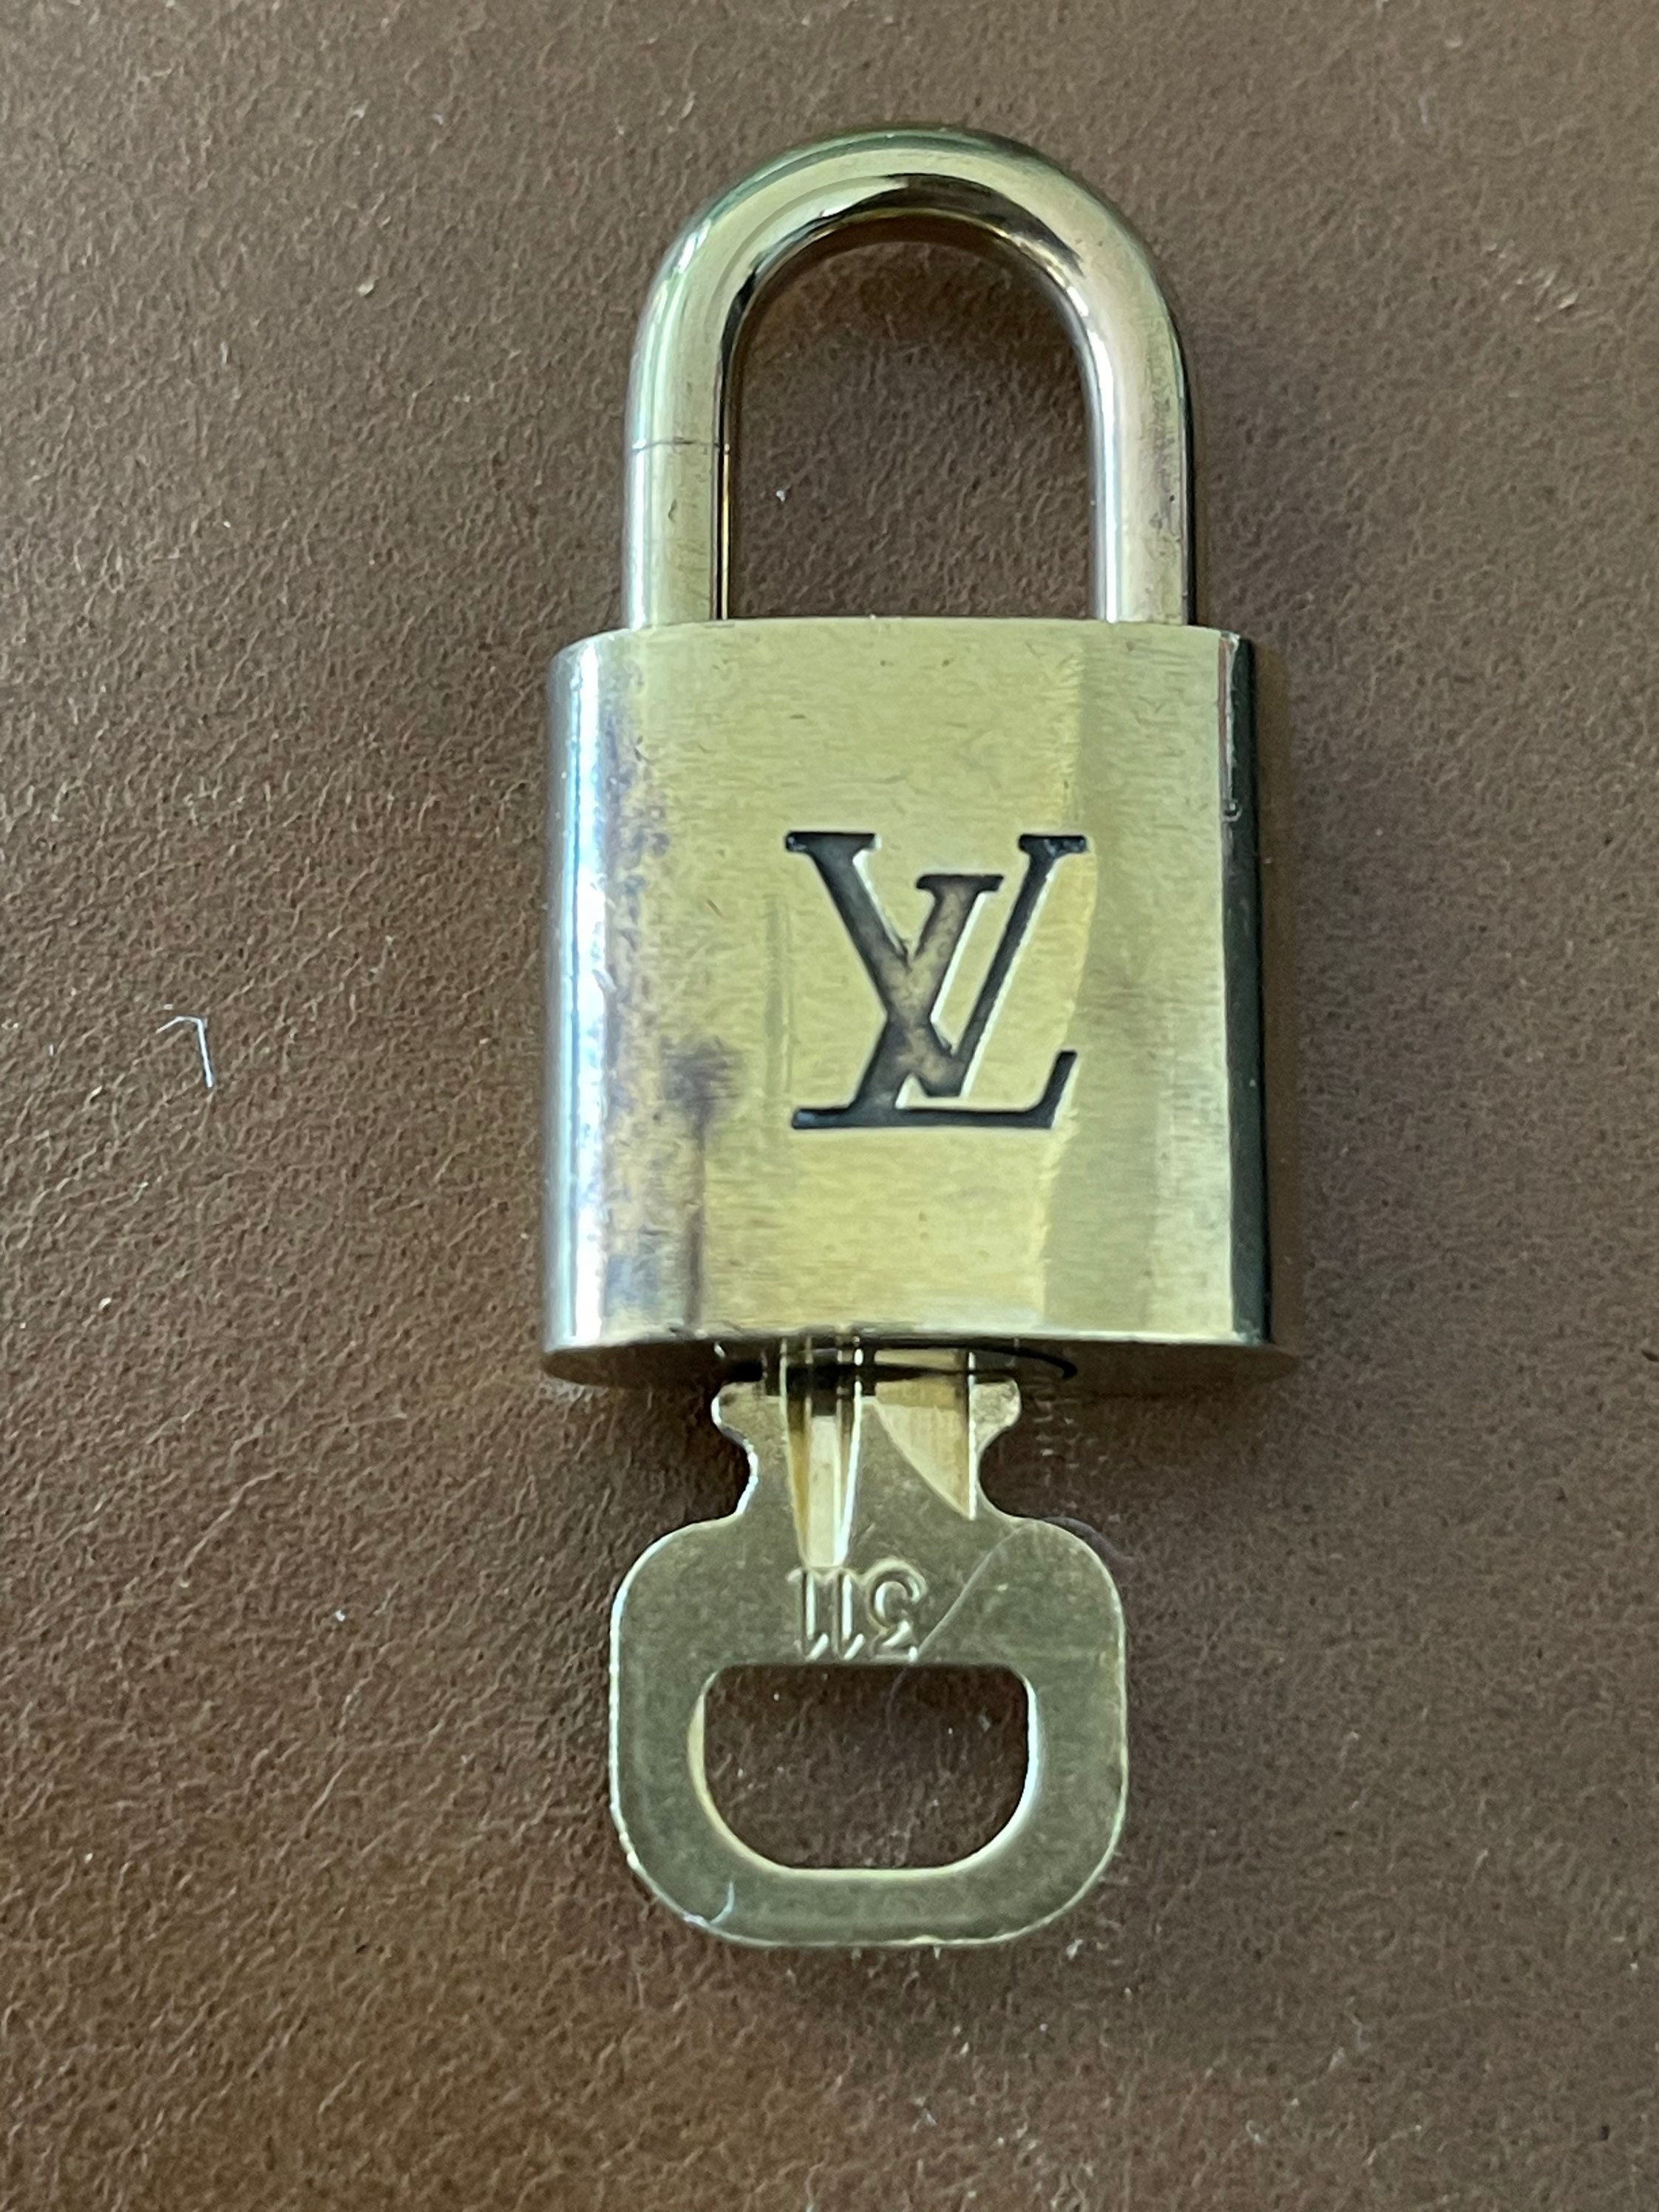 louis vuitton purse lock and key